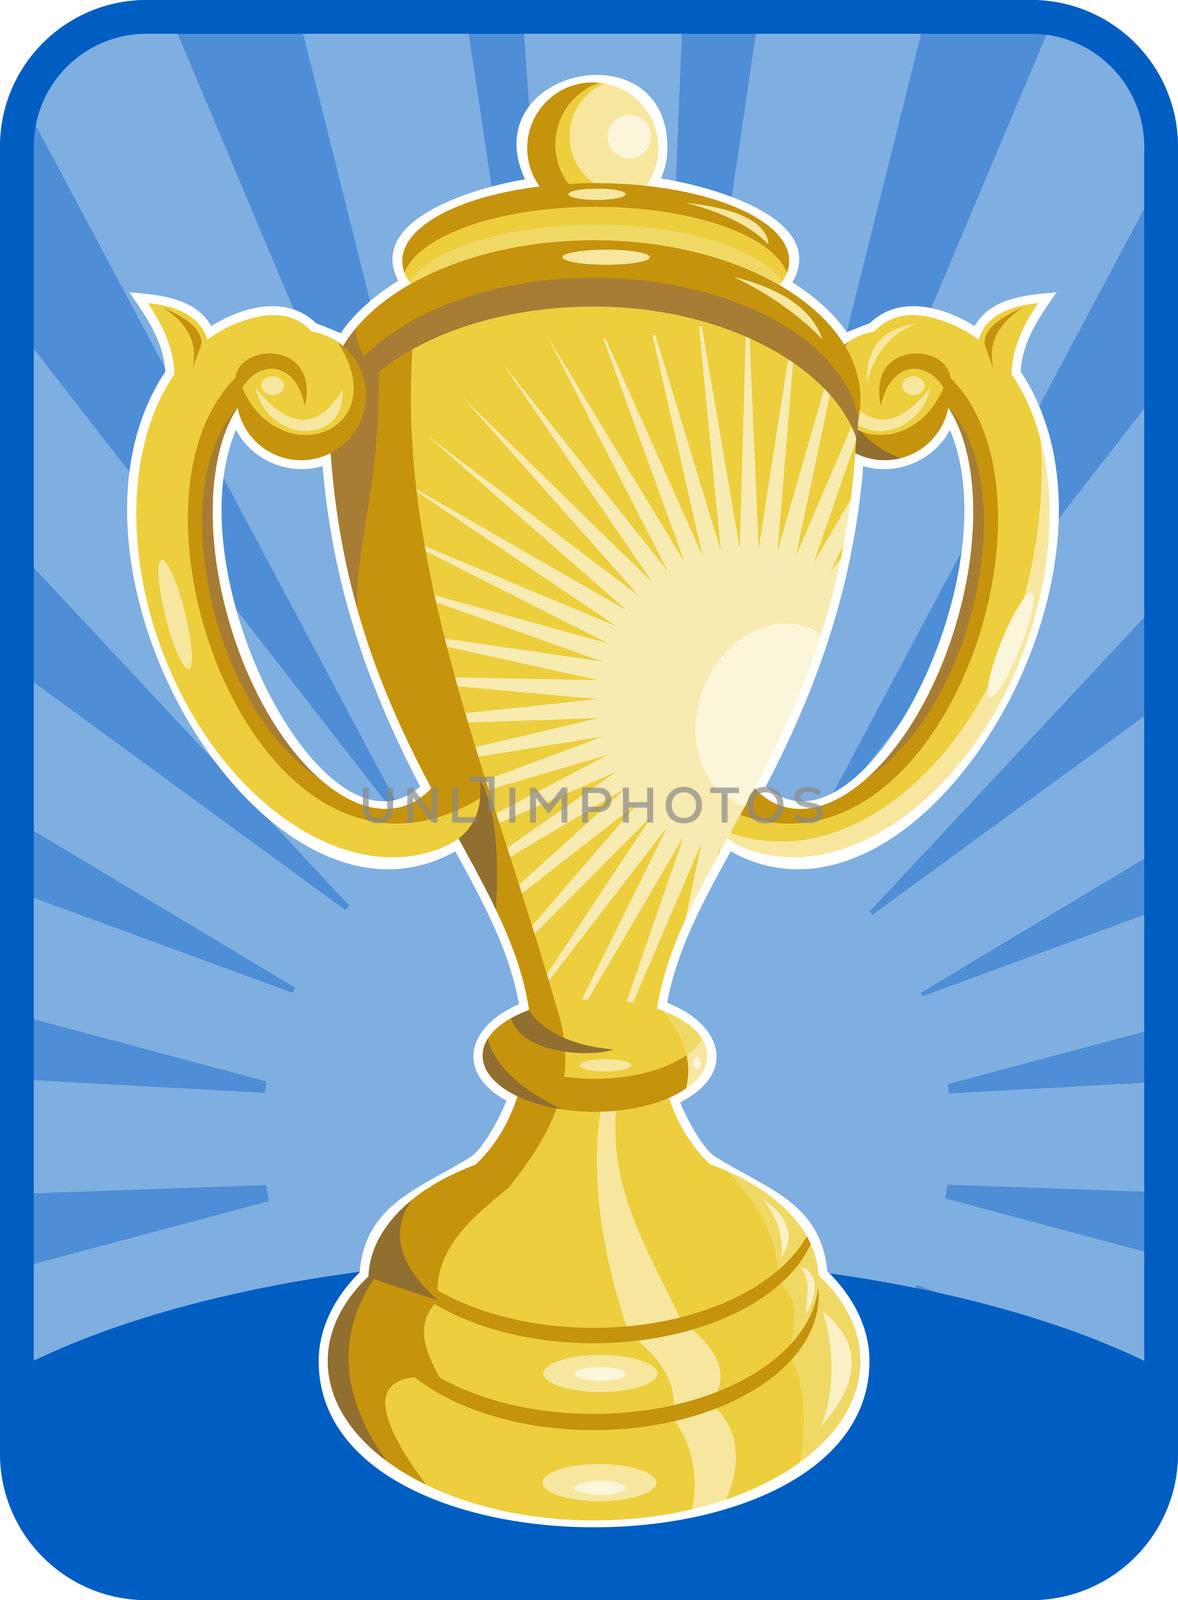  trophy championship cup by patrimonio